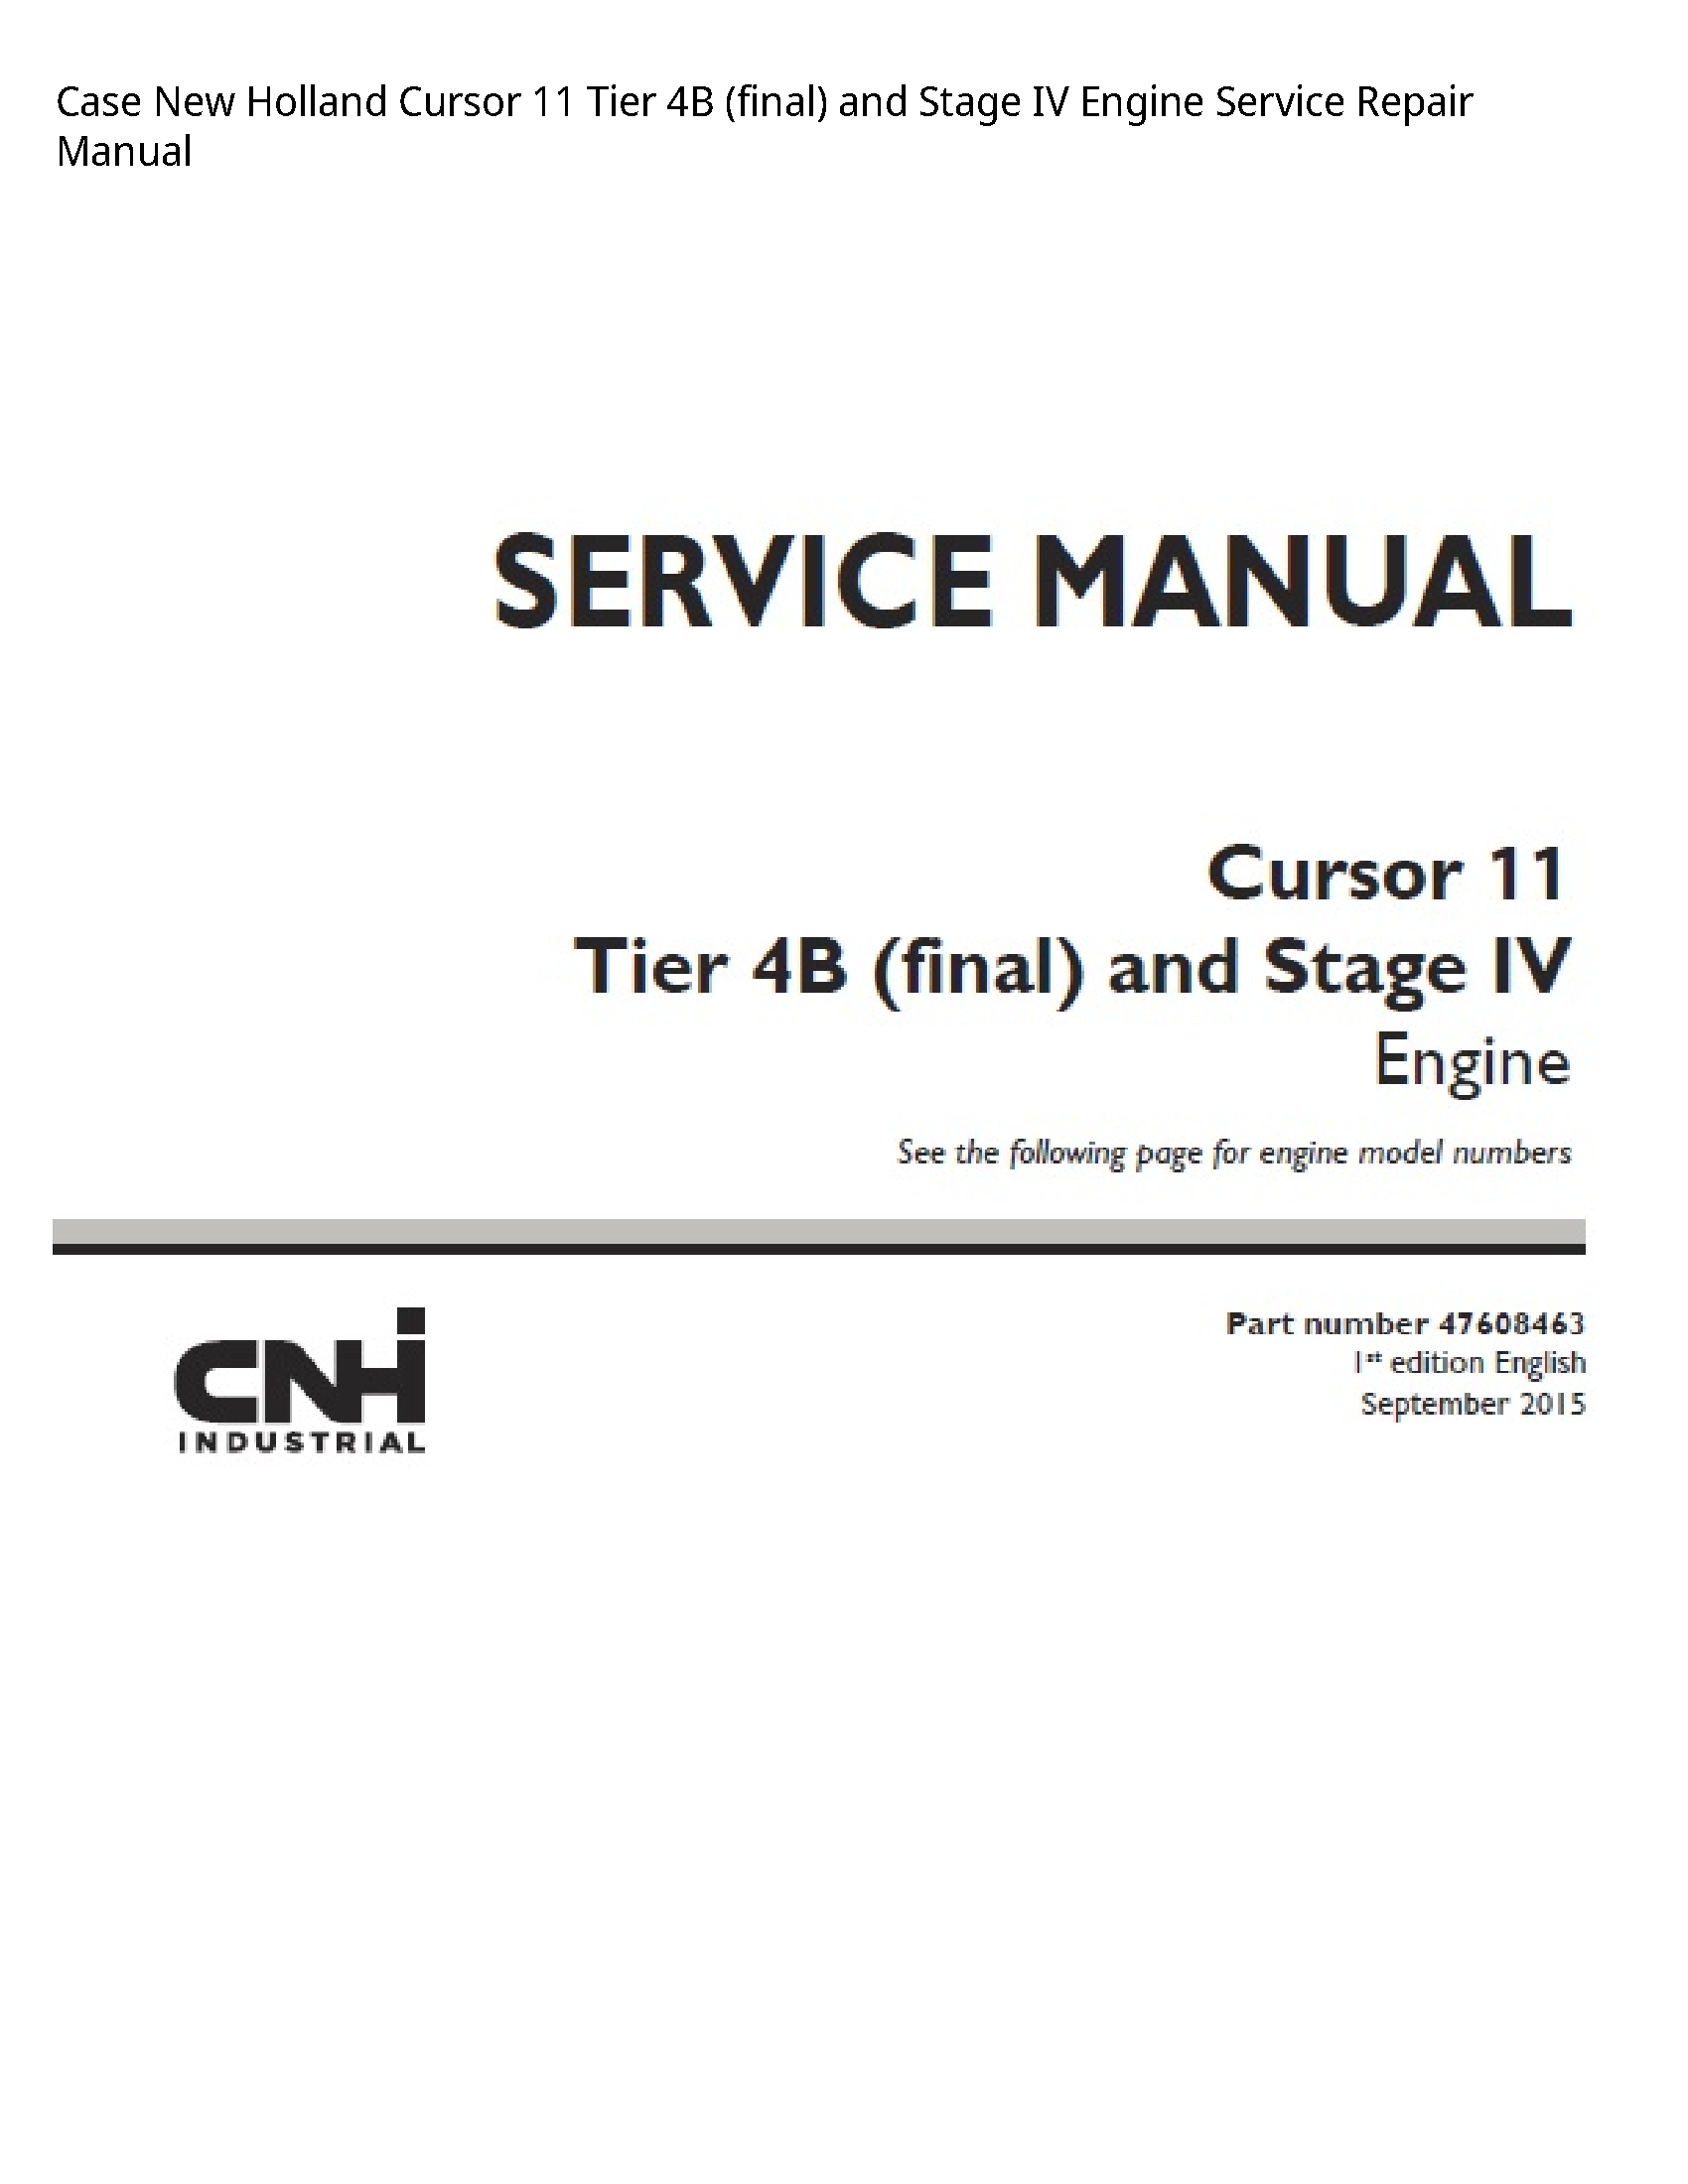 Case/Case IH 11 New Holland Cursor Tier (final)  Stage IV Engine manual